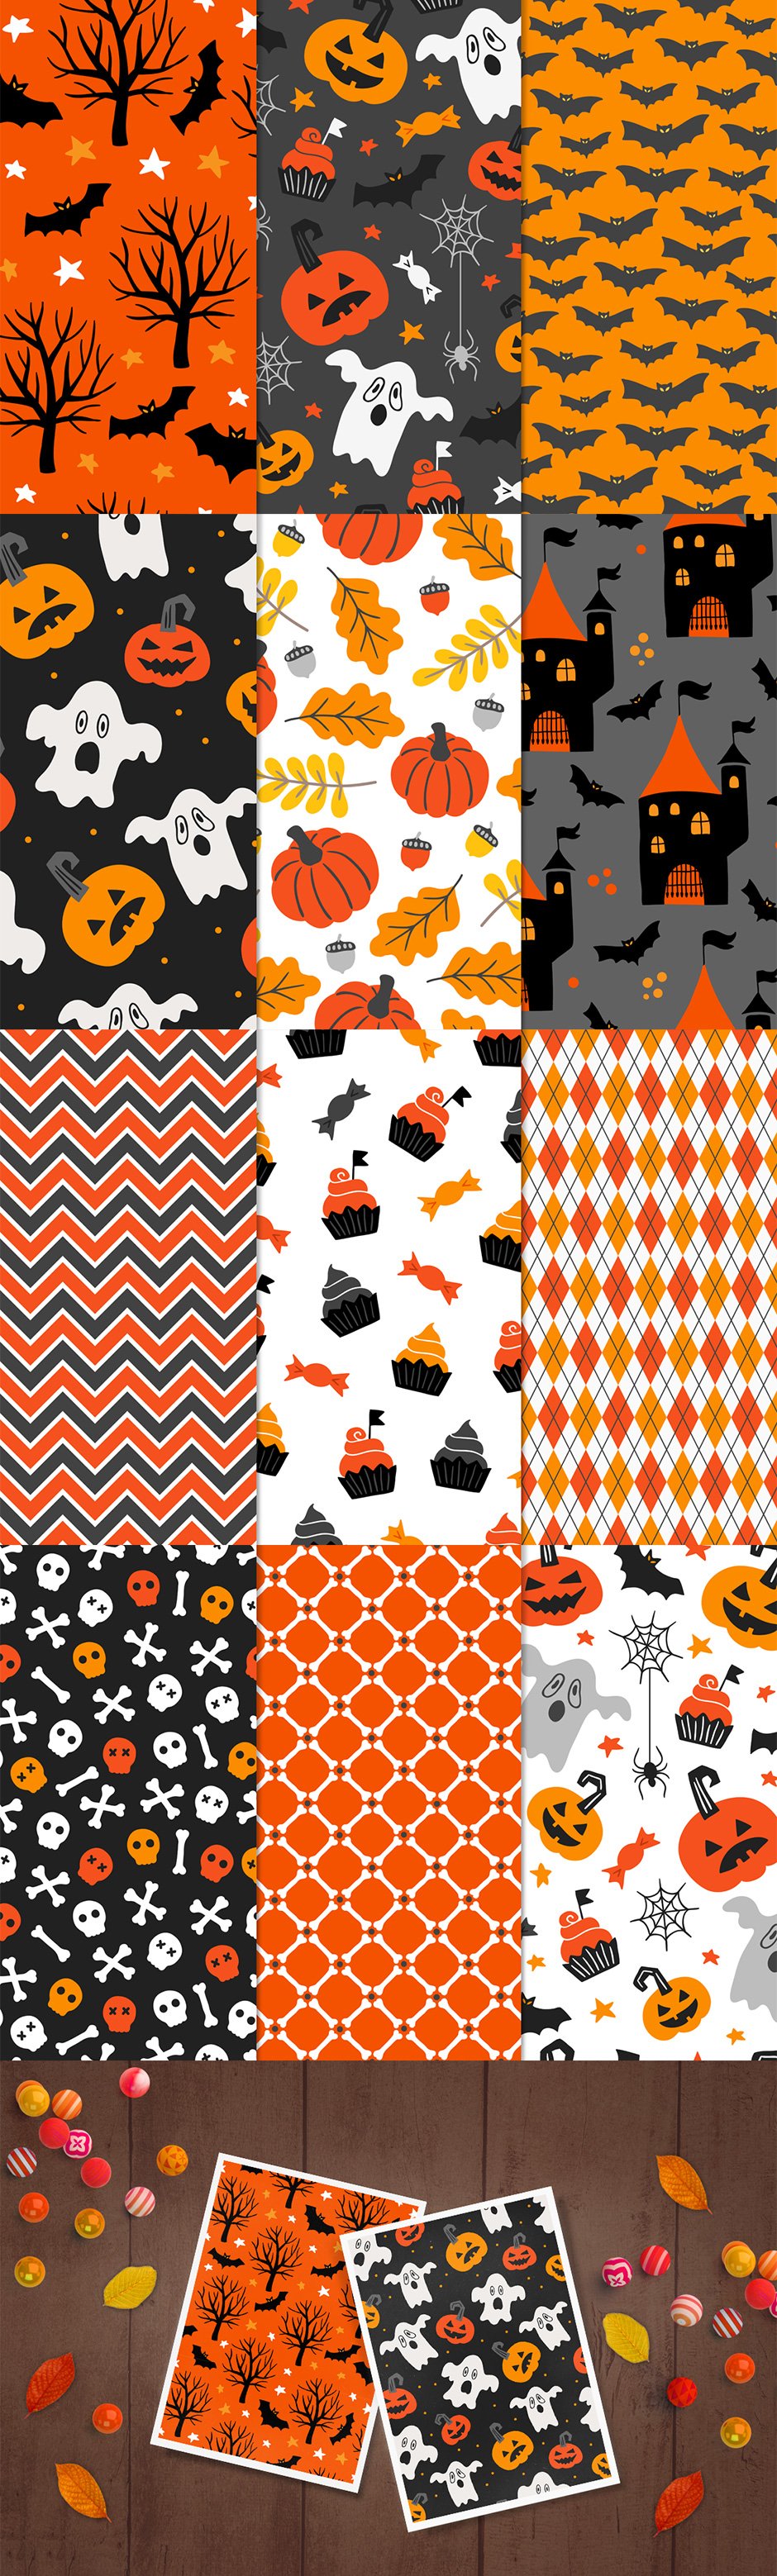 12 Halloween Seamless Patterns